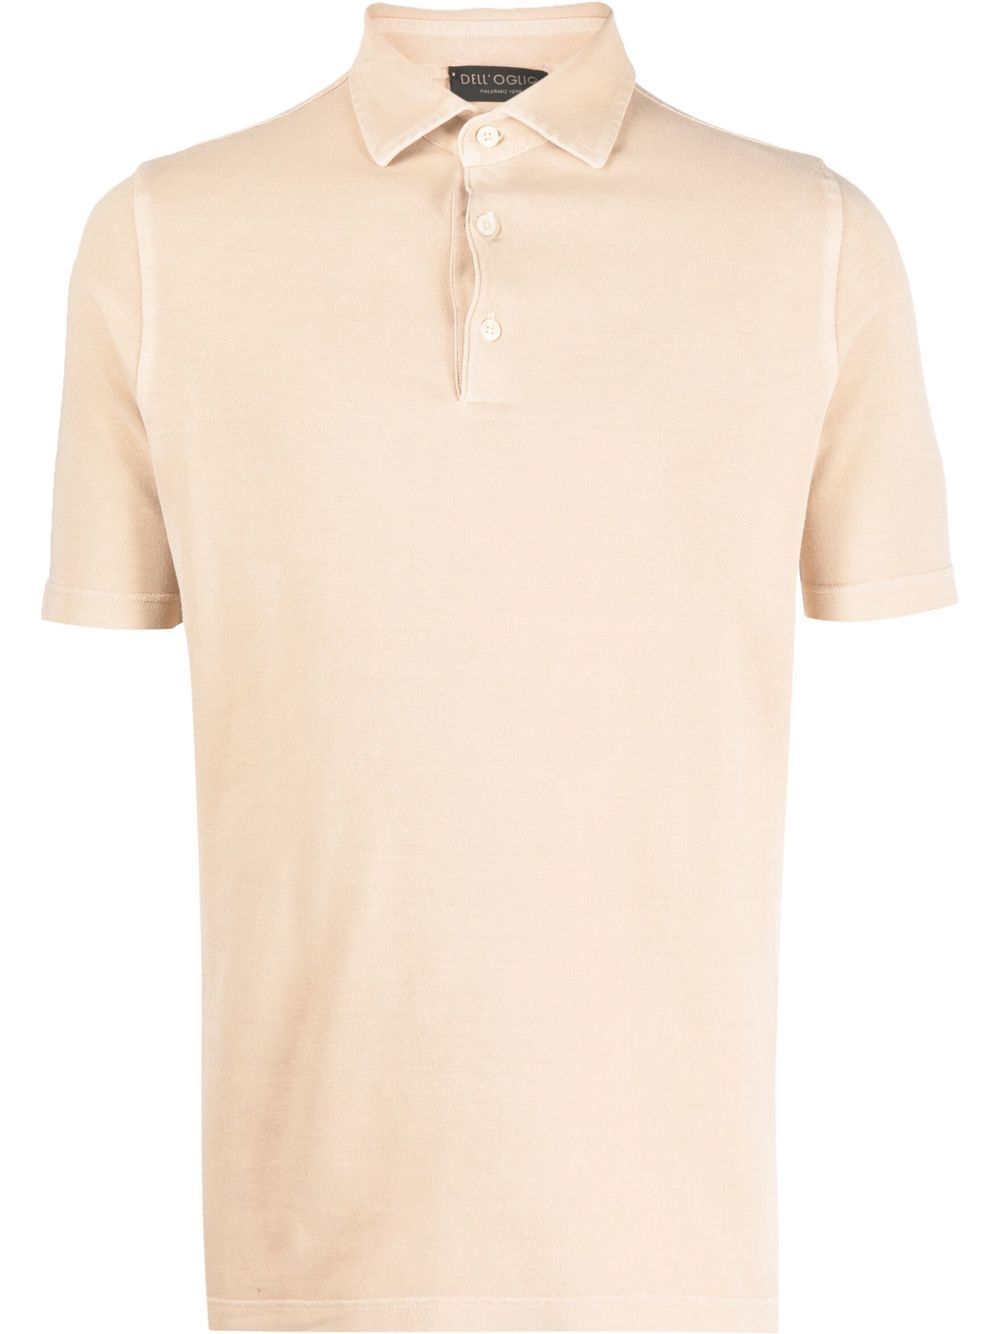 Dell'oglio short-sleeved polo shirt